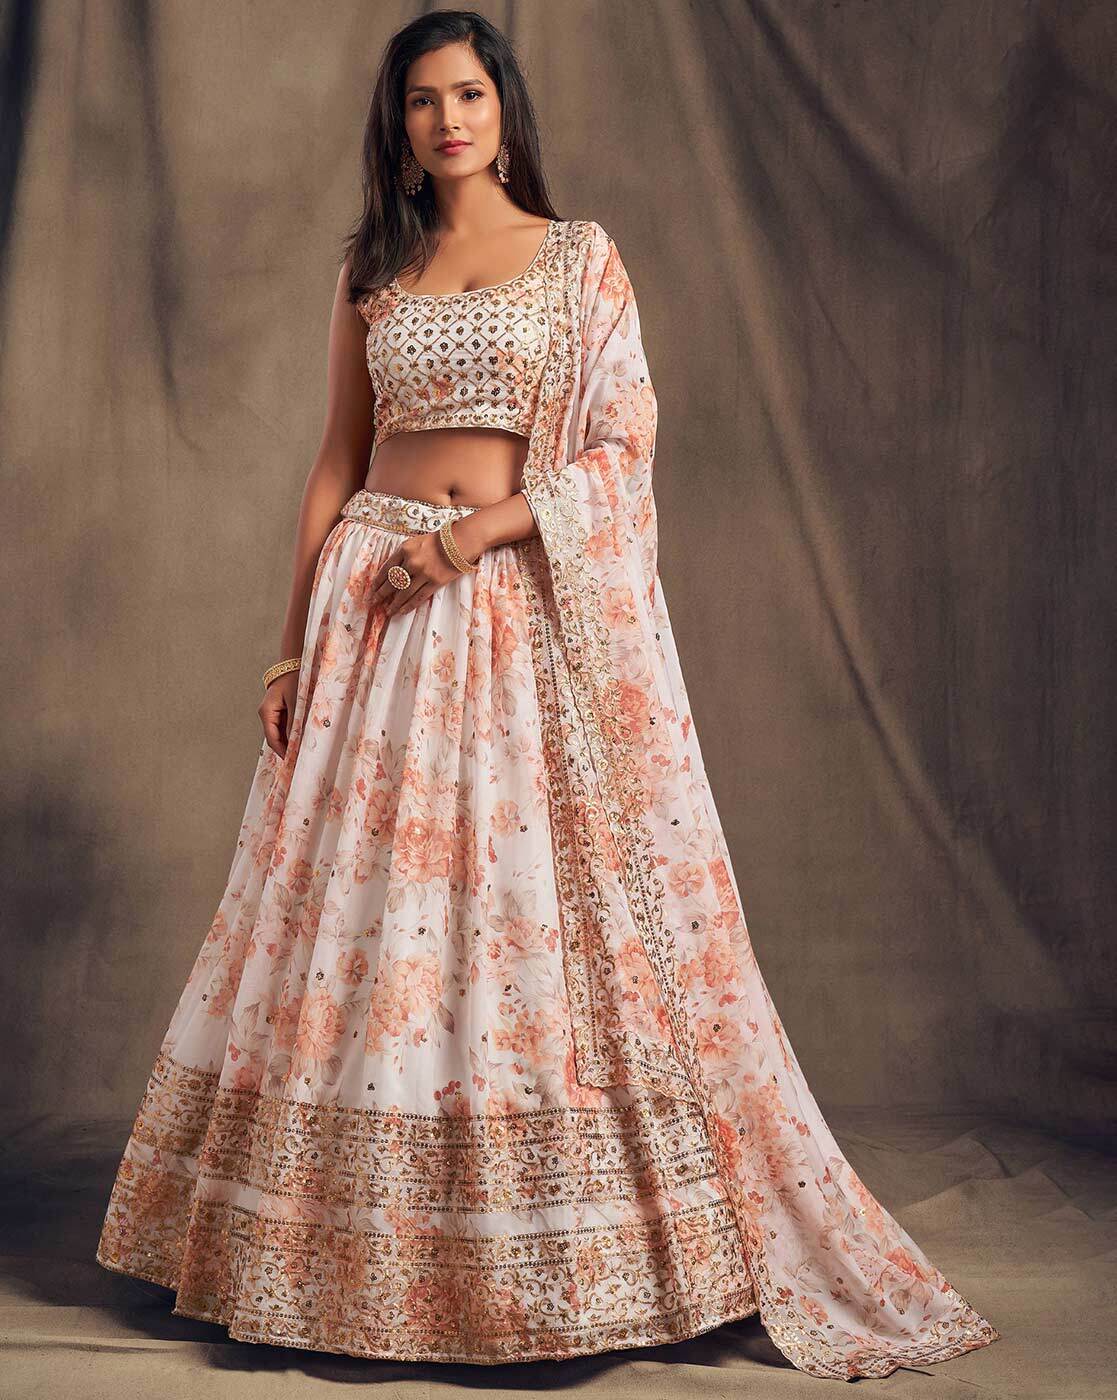 Zeel Clothing Beige Net Semi-Stitched Bridal Lehenga Choli  (7908-Beige-Wedding-Lehenga-Choli; Beige) : Amazon.in: Fashion